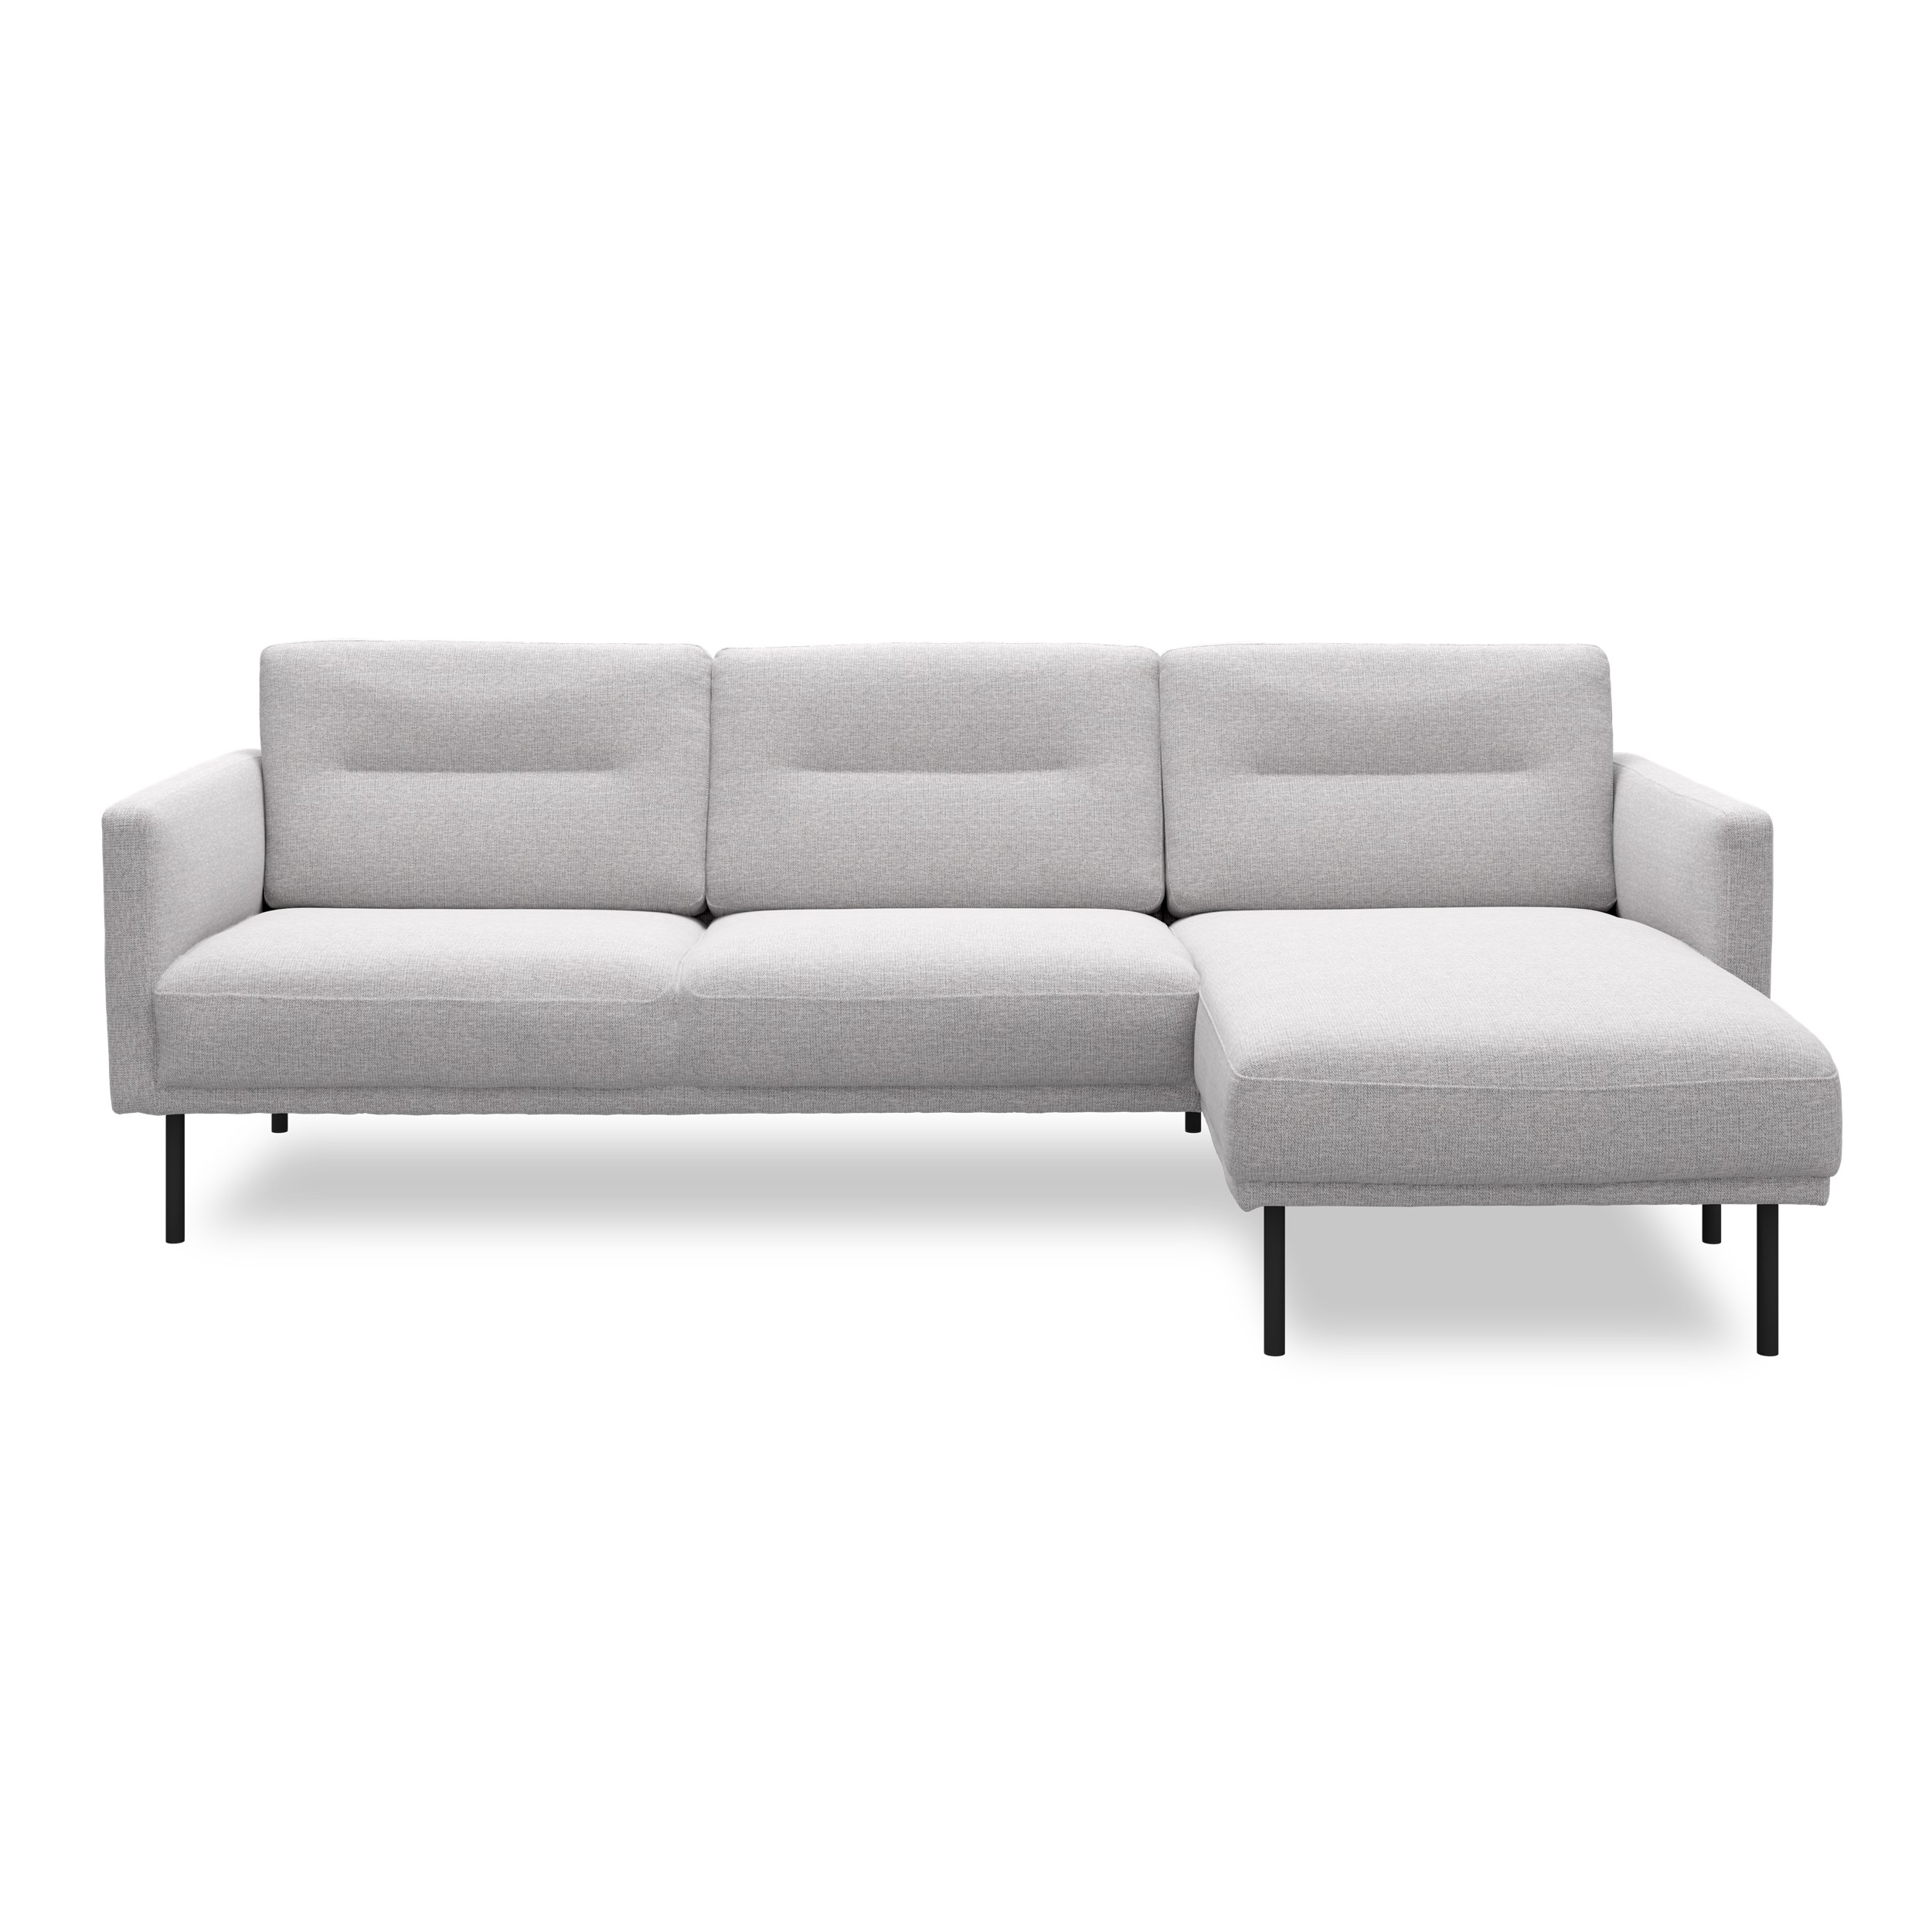 Larvik Sofa med chaiselong - Hampton 372 Light grey stof og ben i sortlakeret metal